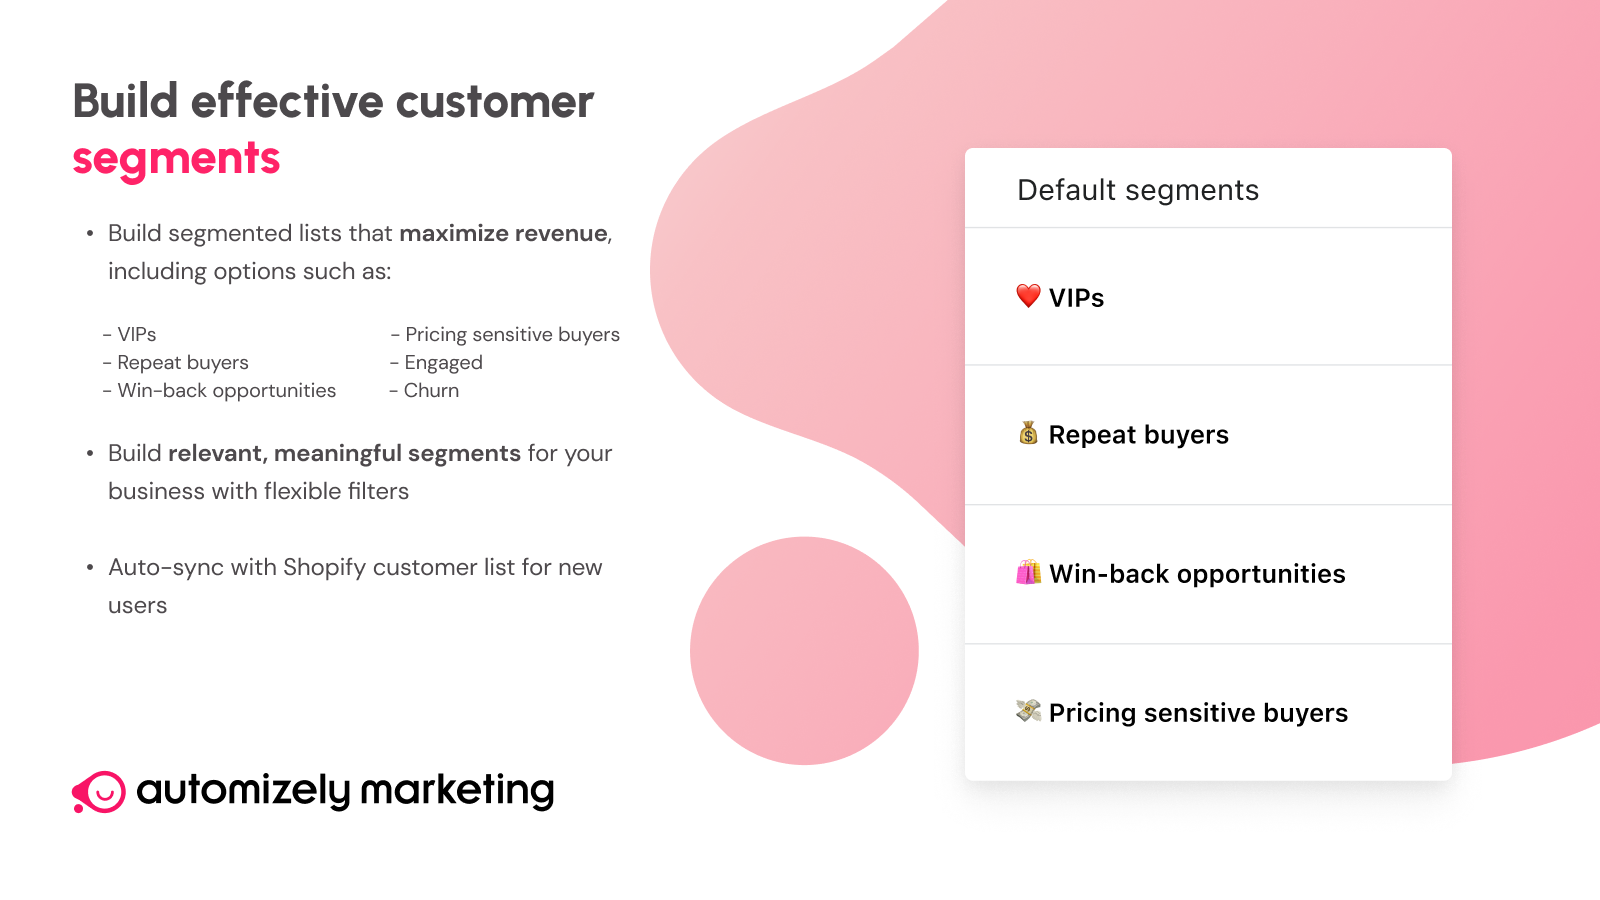 Build effective customer segments